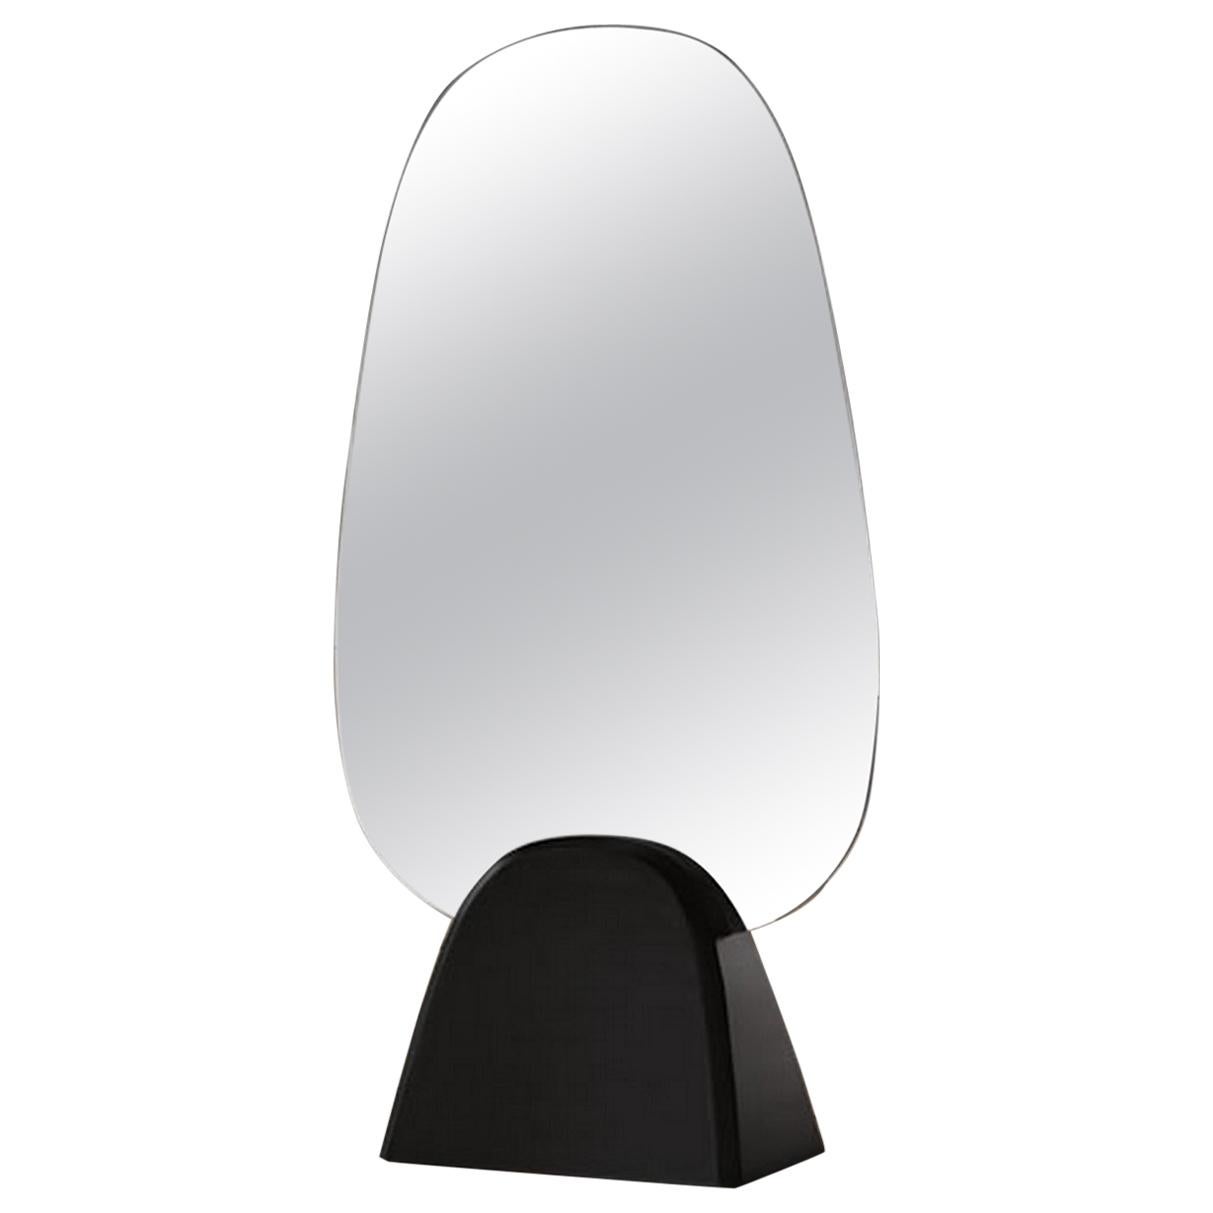 In stock in Los Angeles, Tropikal Mirror, Designed by Karim Rashid Made in Italy